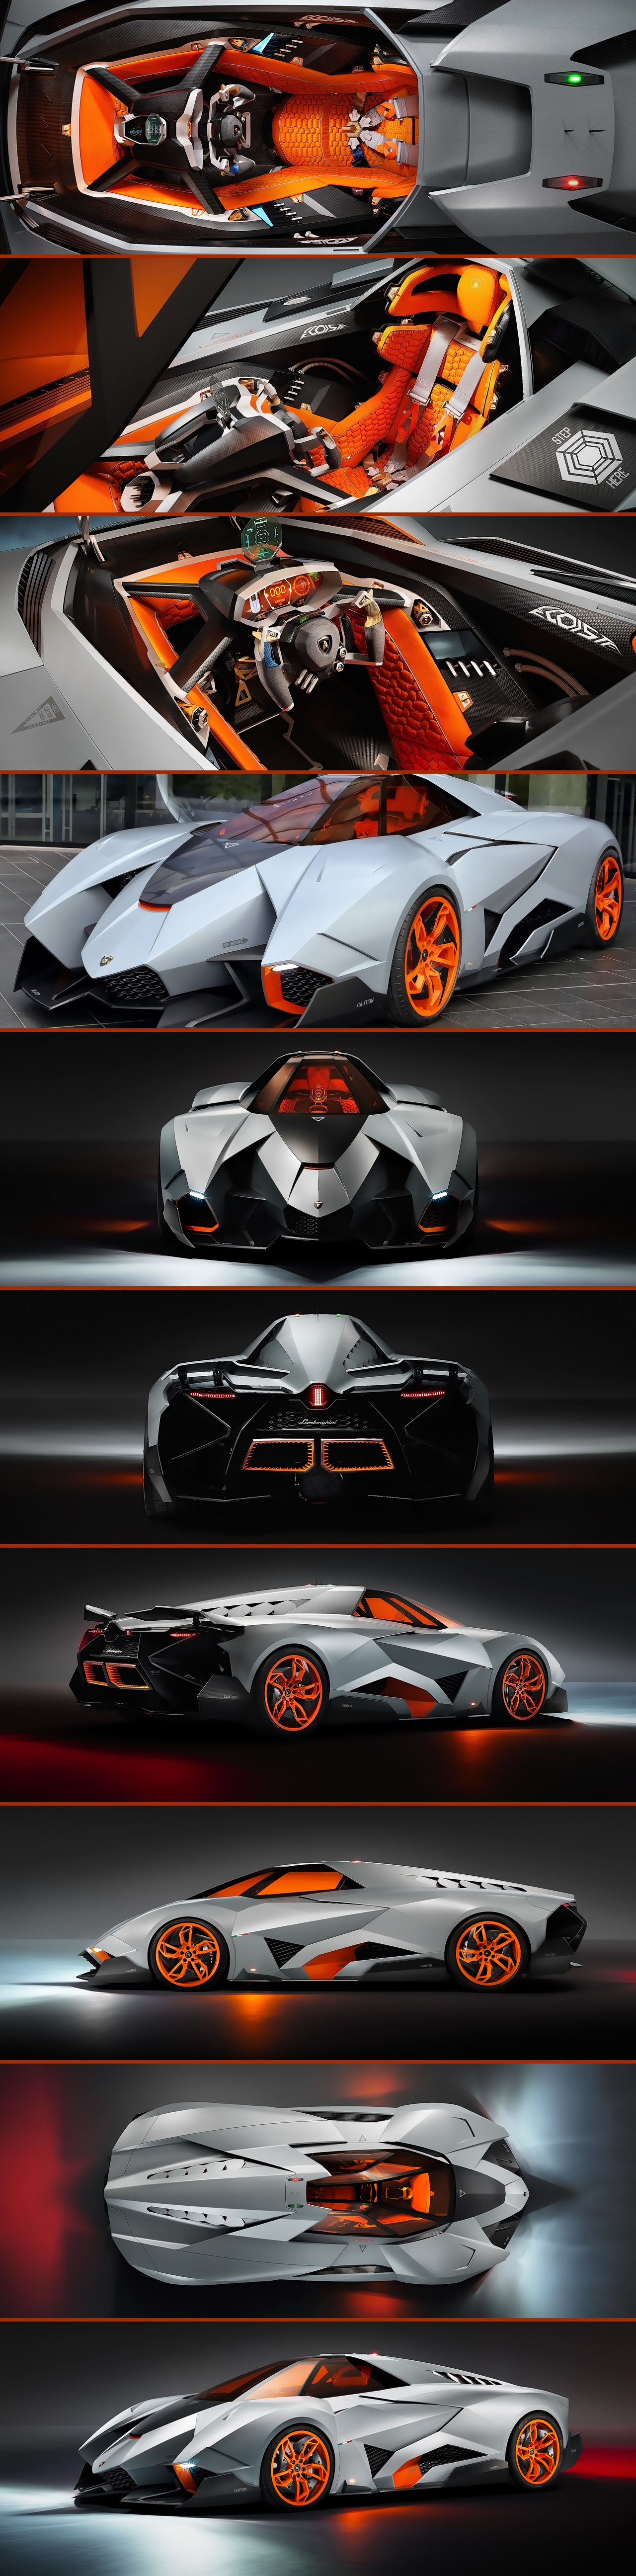 Lamborghini Egoista Wallpaper Pack by jlfarfan on DeviantArt